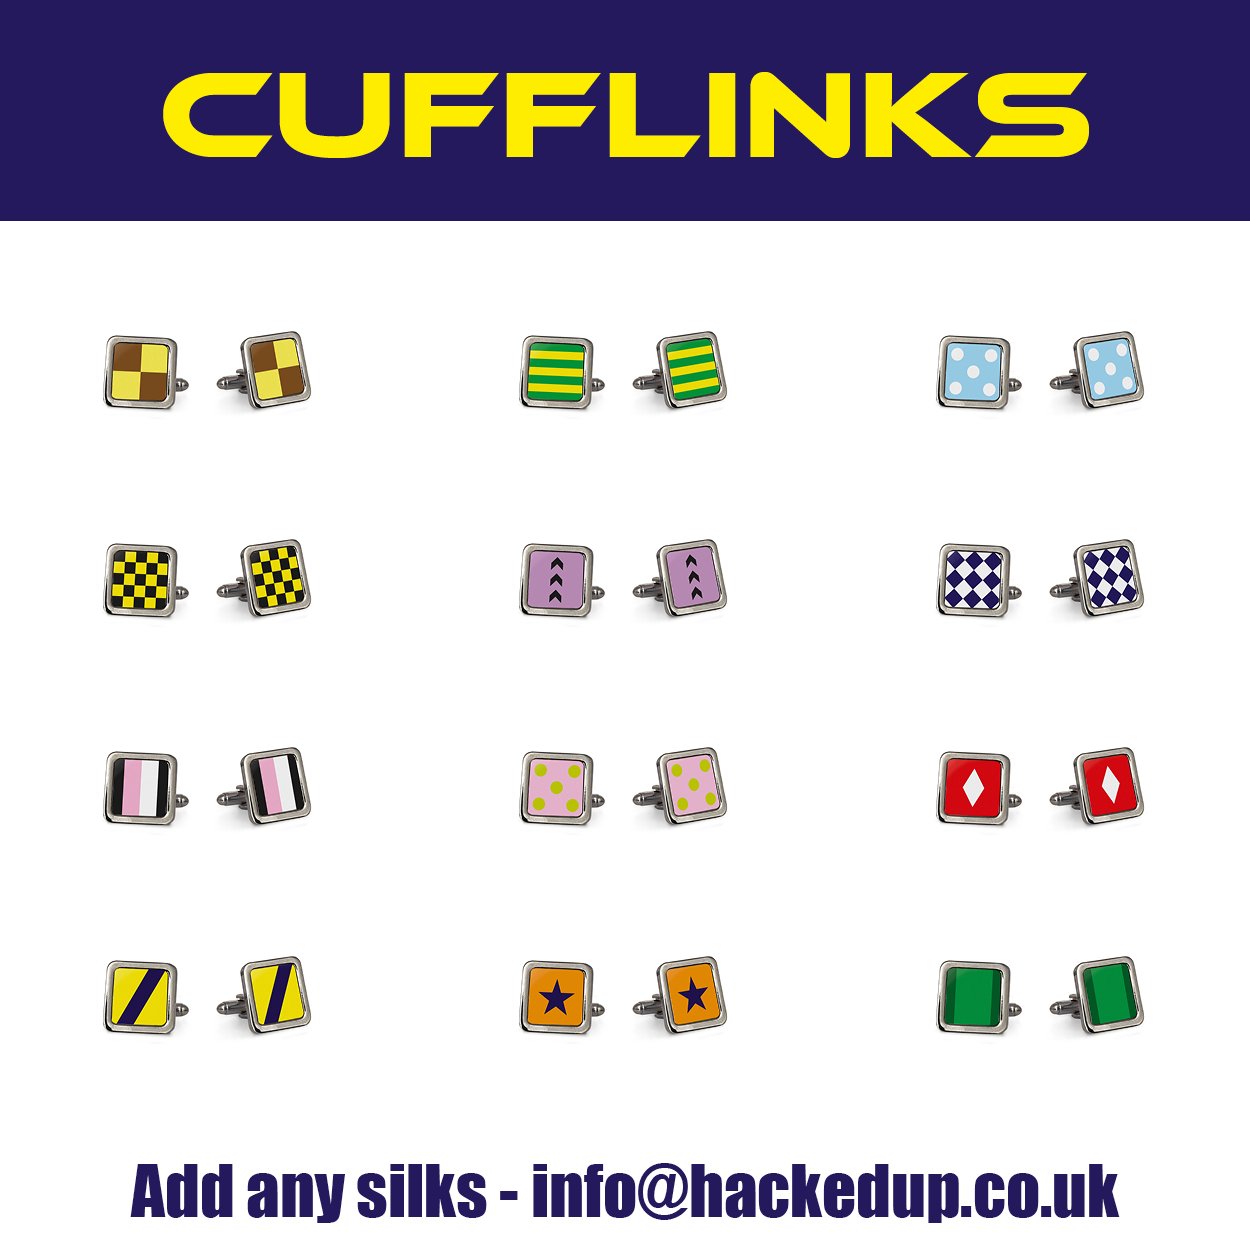 Cufflinks